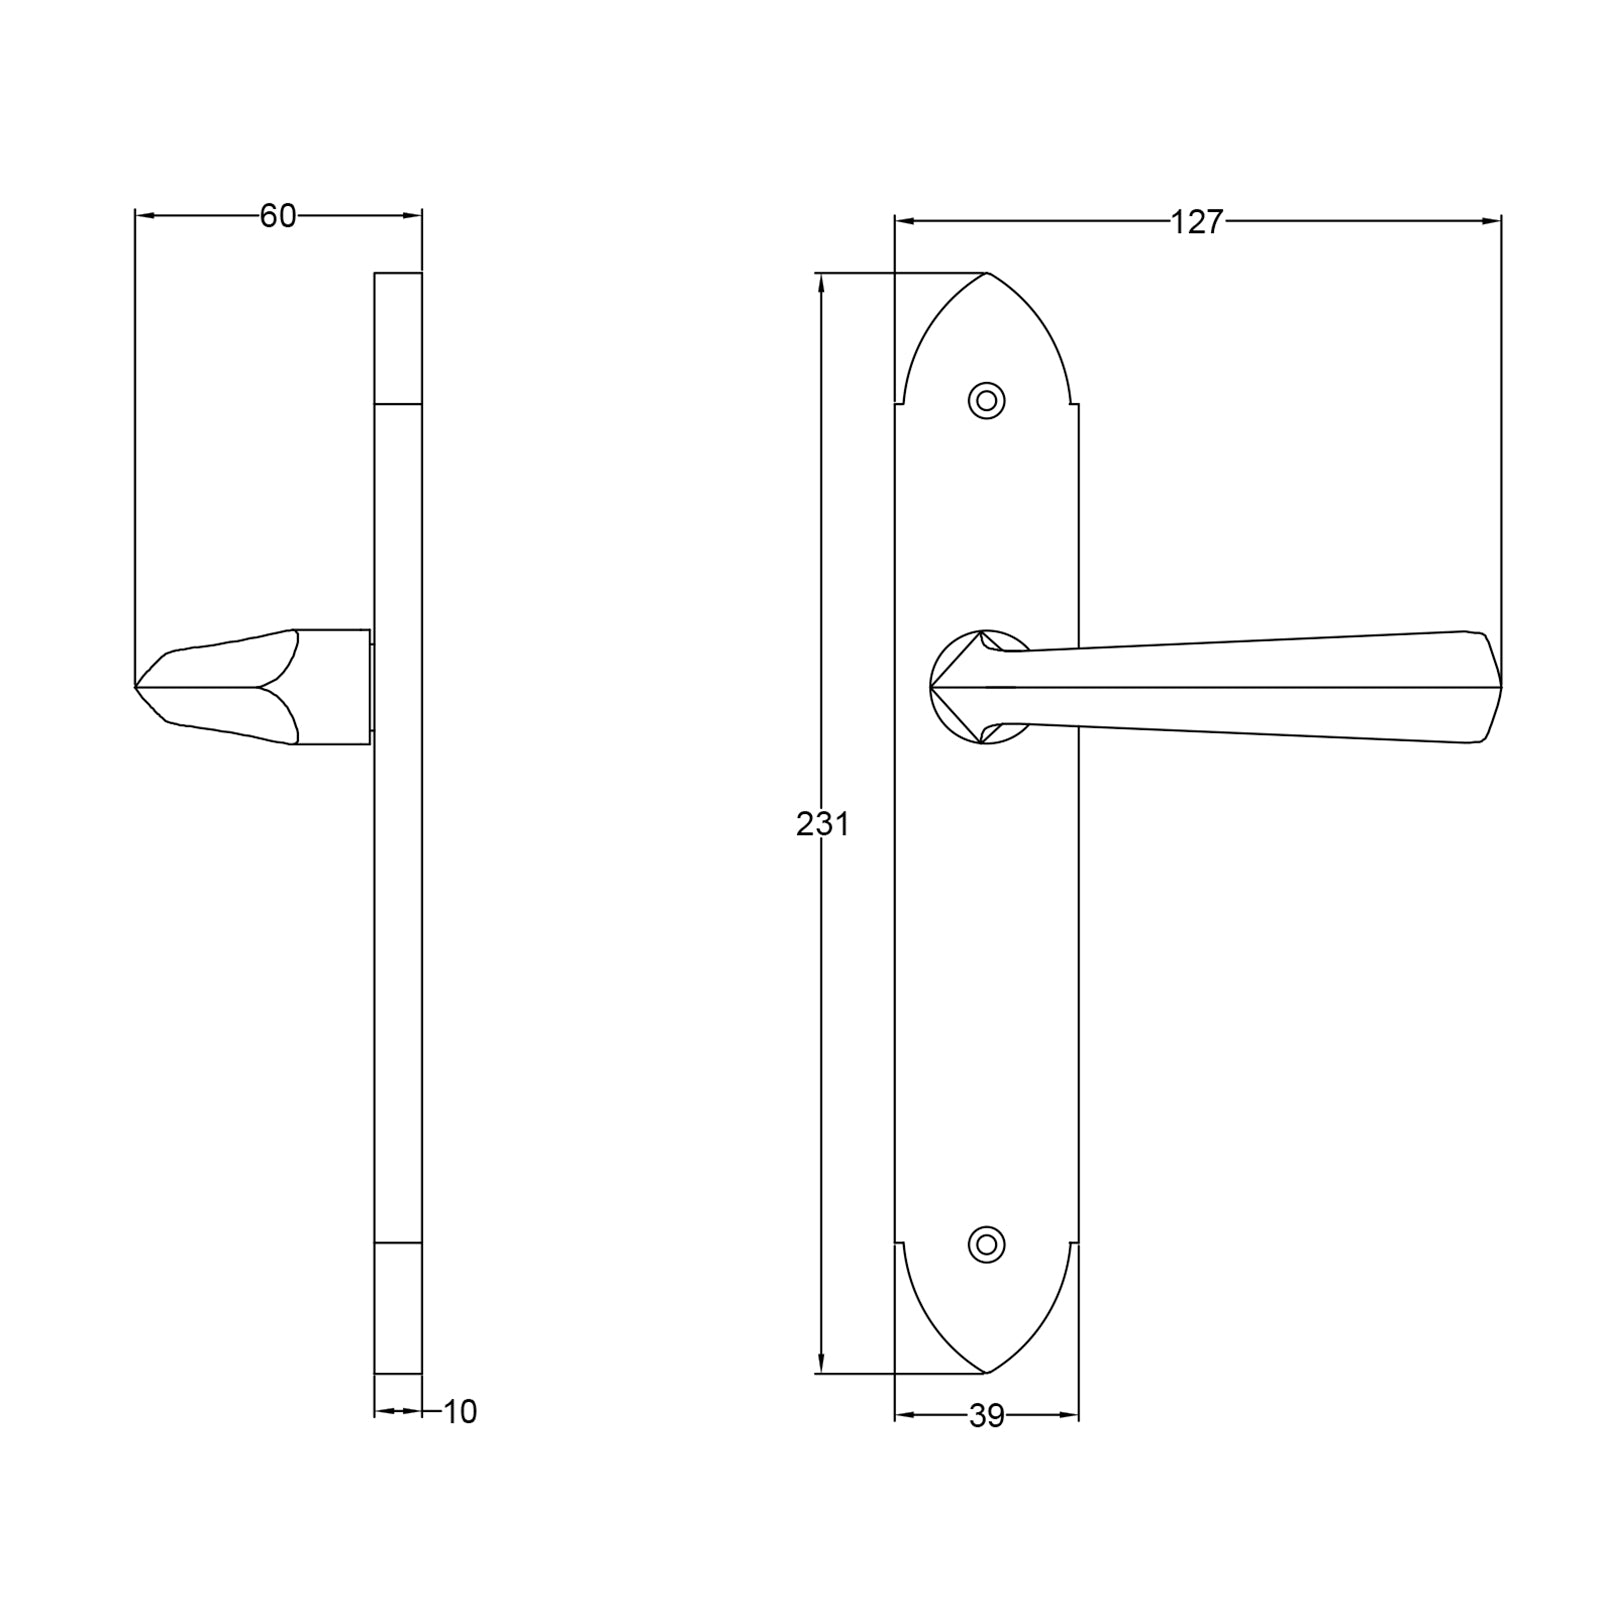 Grafton door handle dimension drawing SHOW